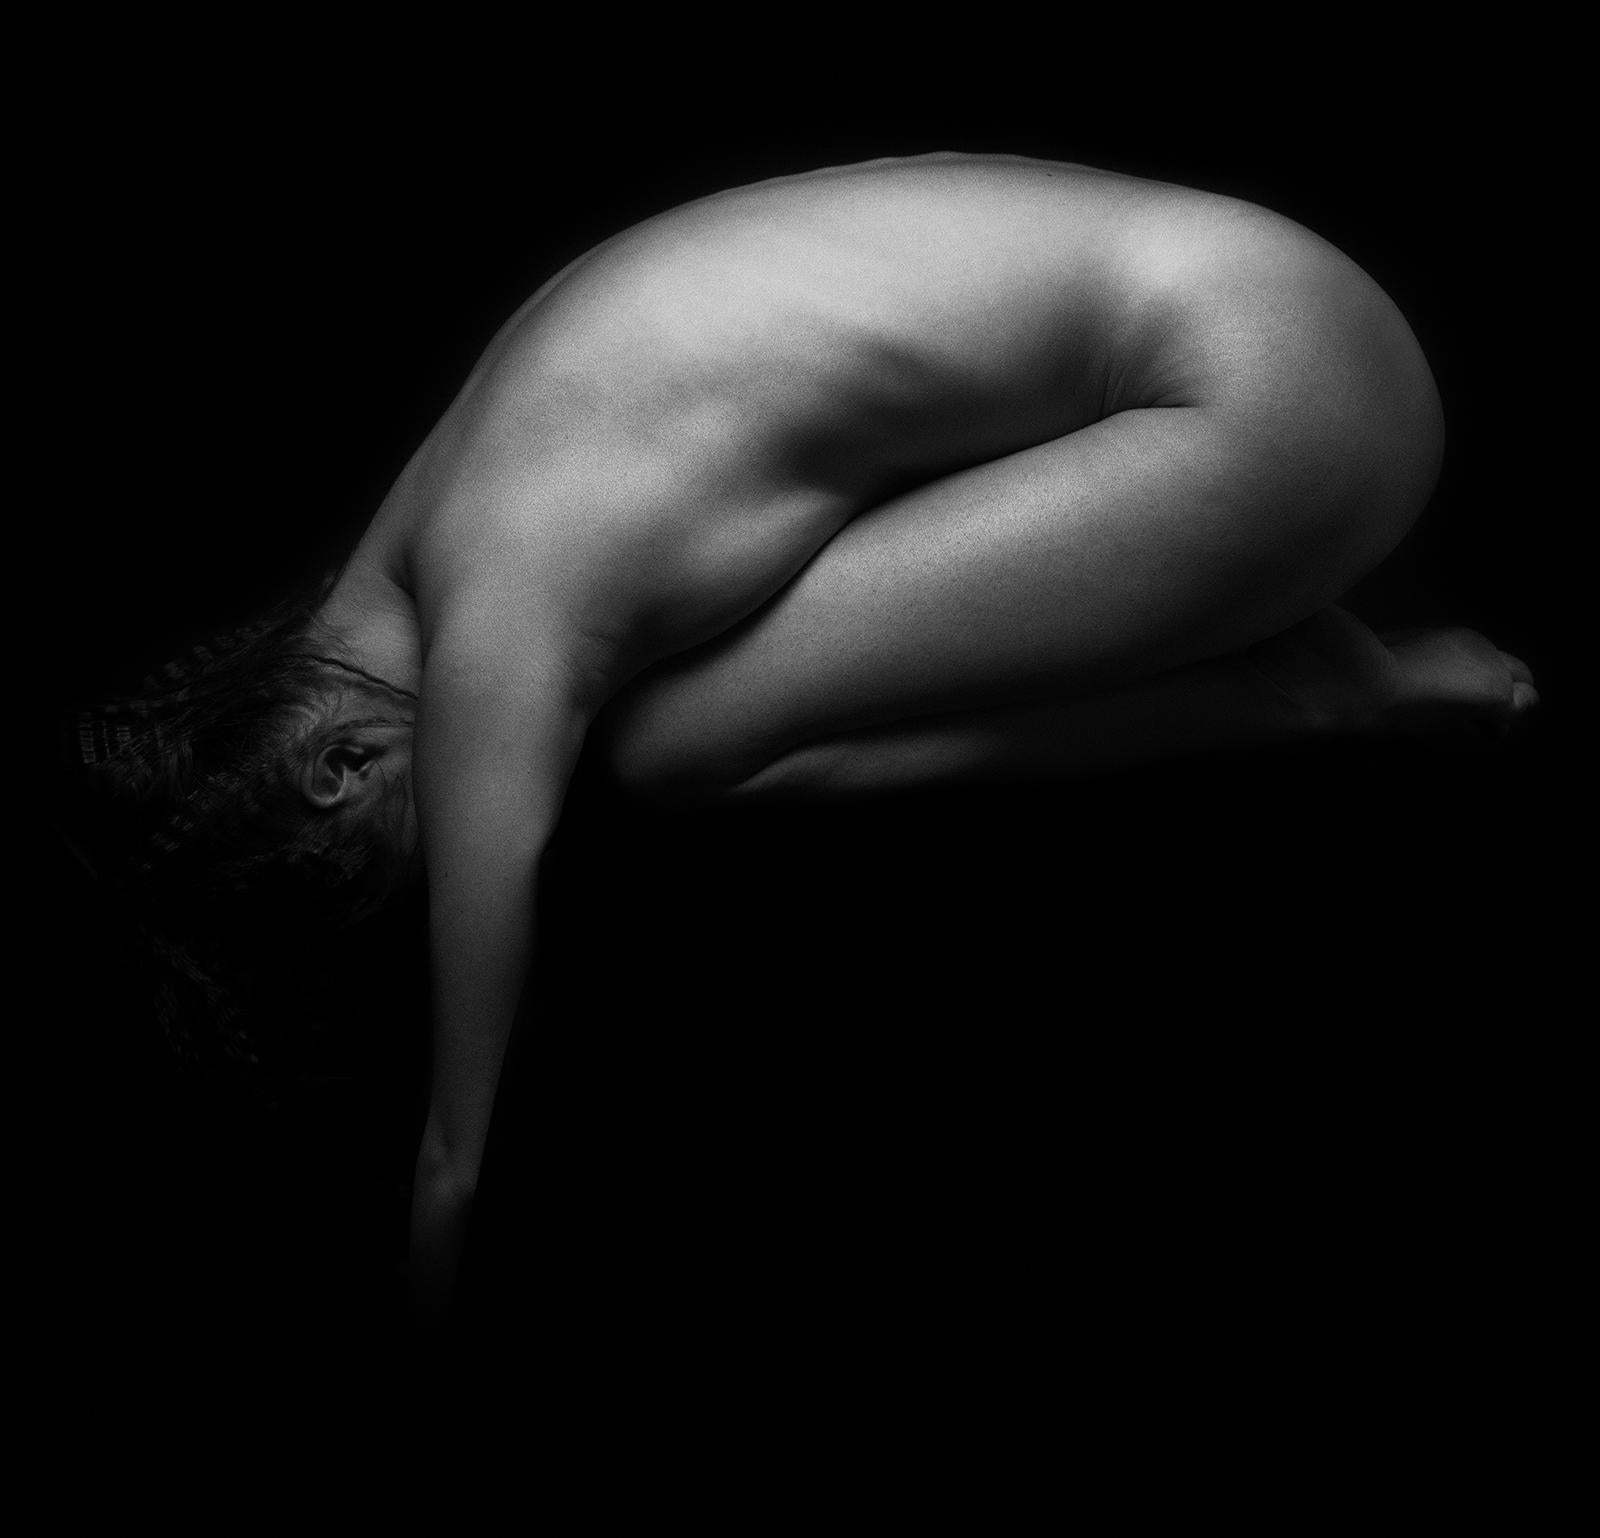 Ian Sanderson Nude Photograph - Valérie-Signed limited edition fine art print, Black white square photo, Sensual